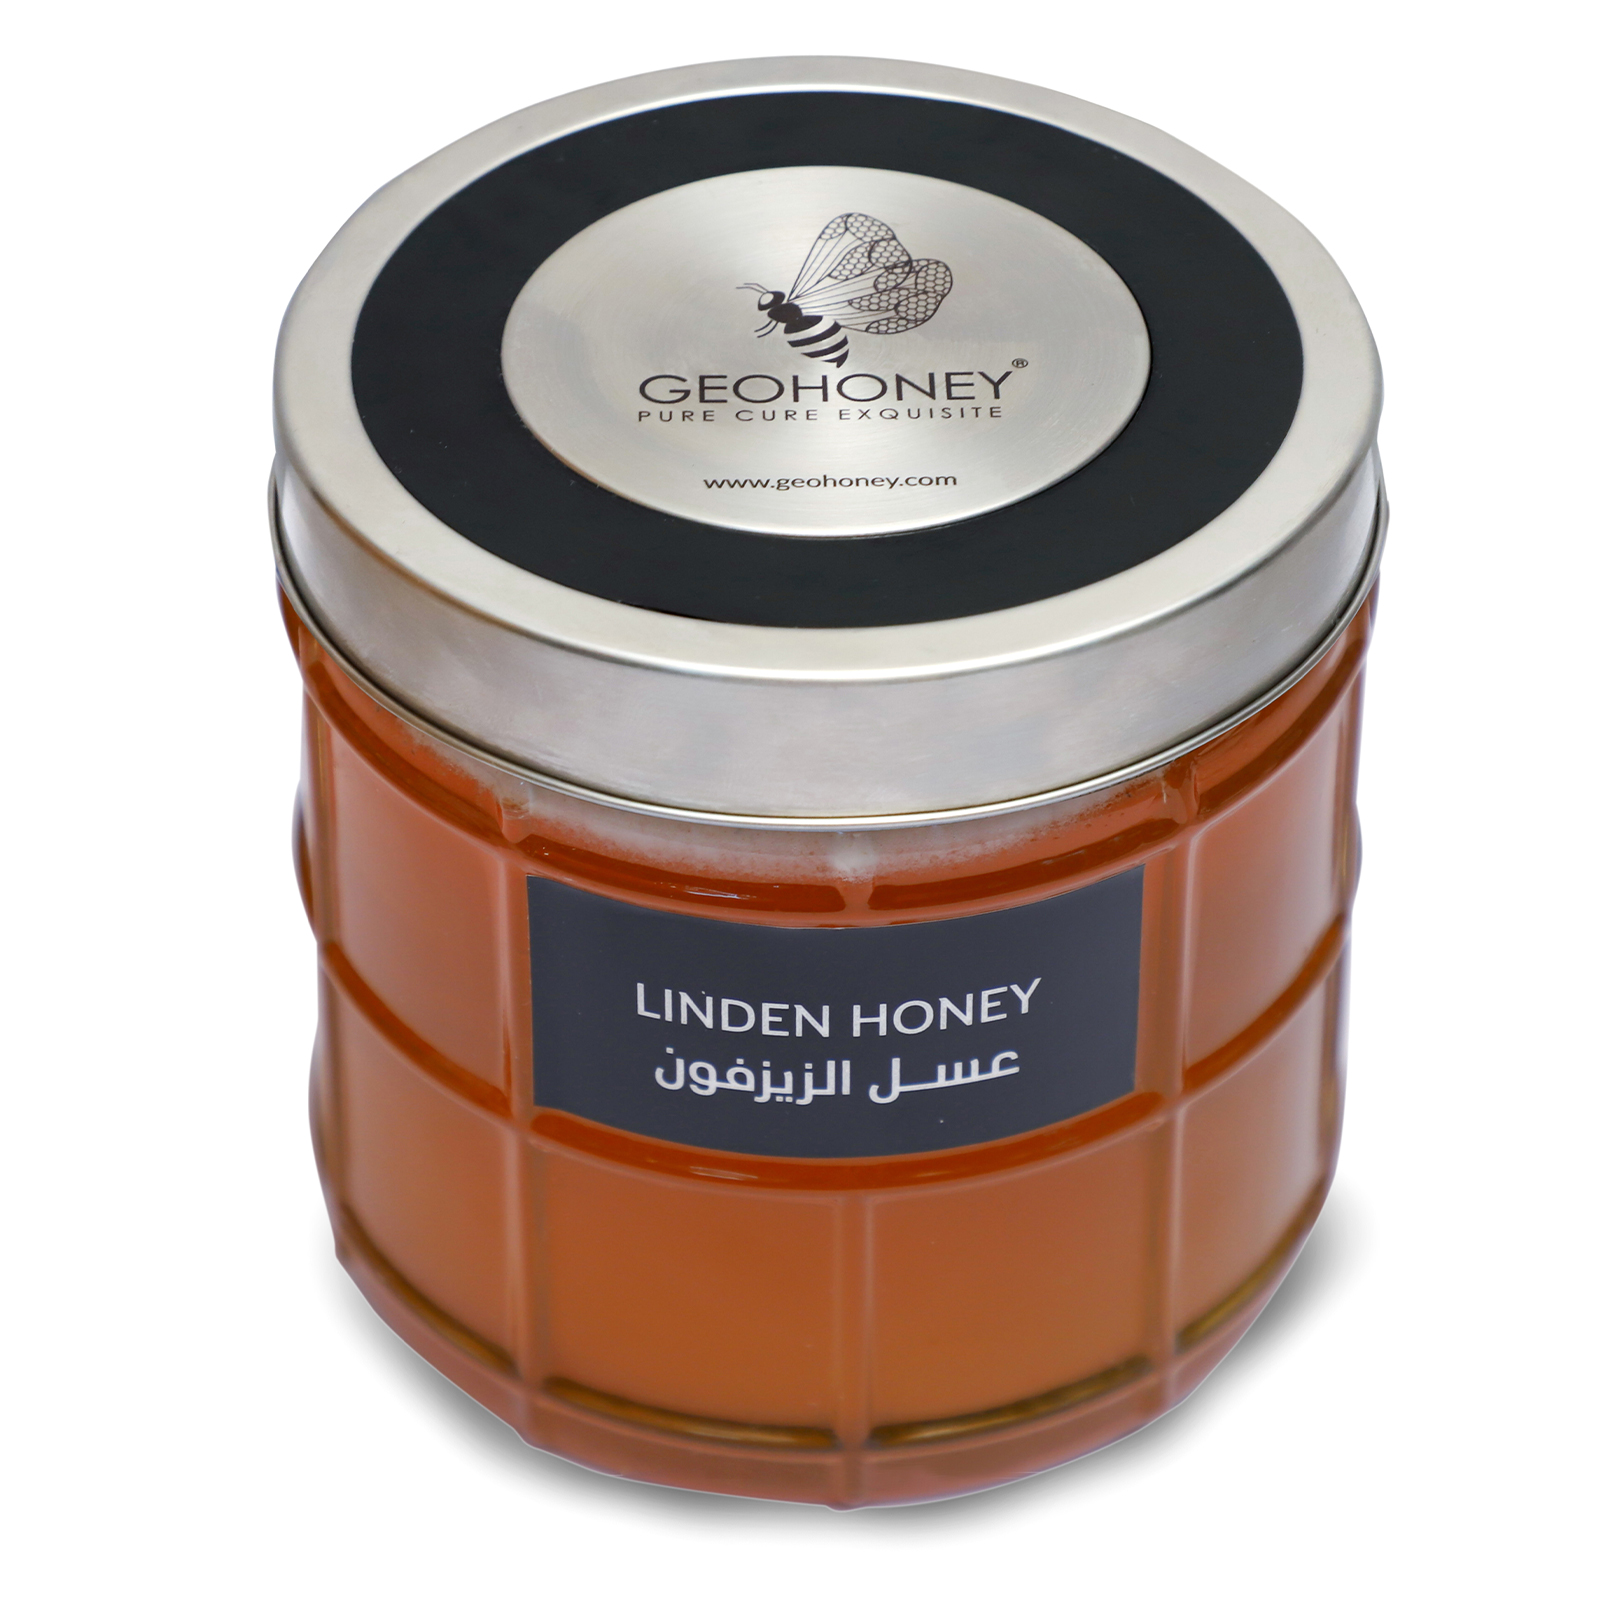 linden honey.JPG  by geohoney